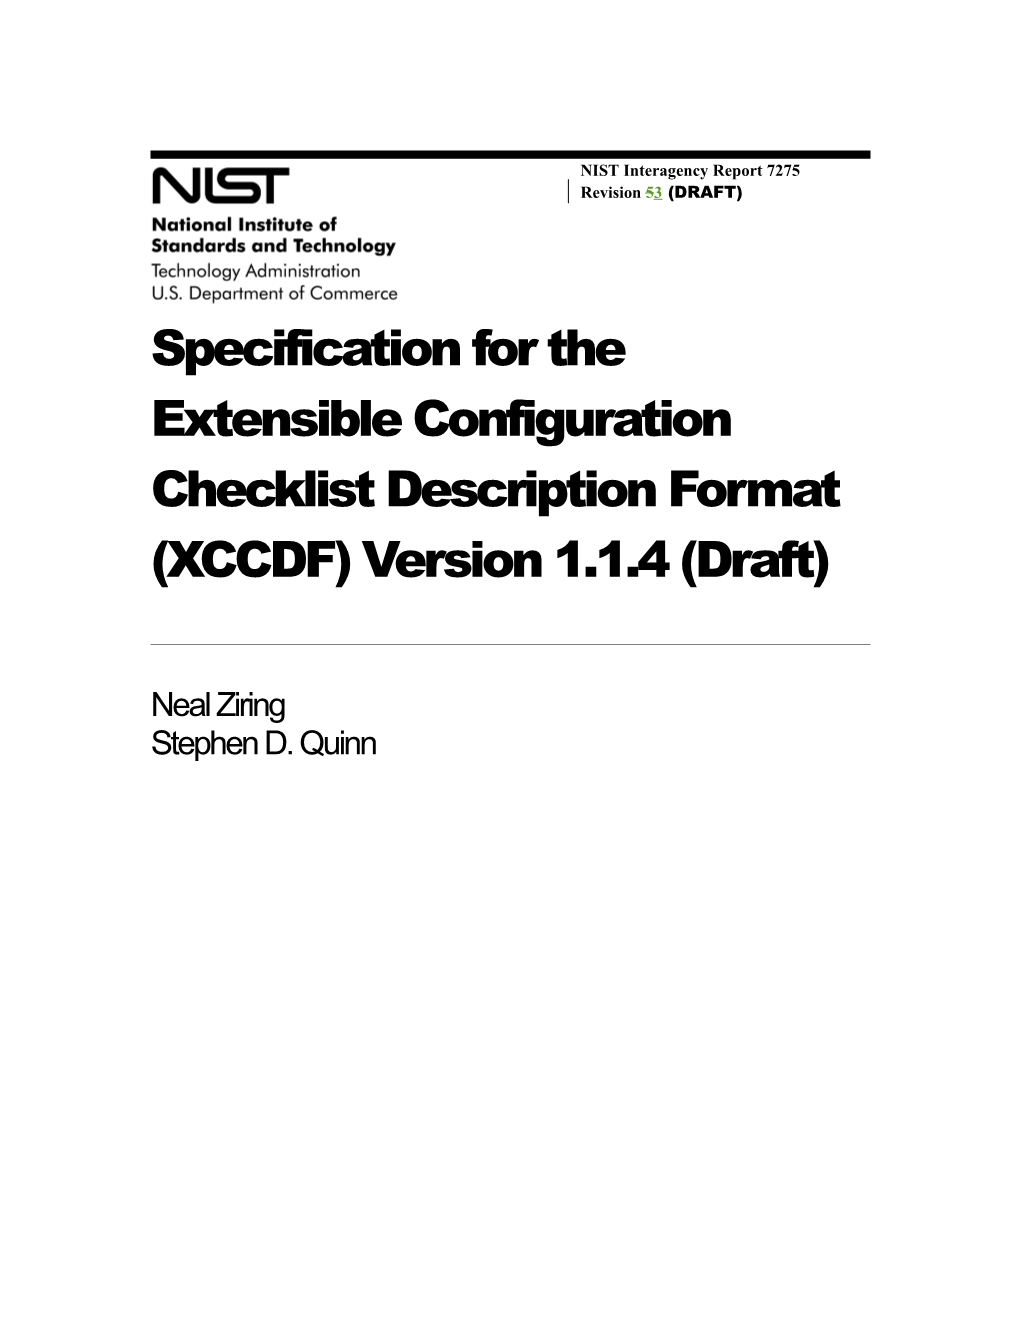 Specification for the Extensible Configuration Checklist Description Format (XCCDF)